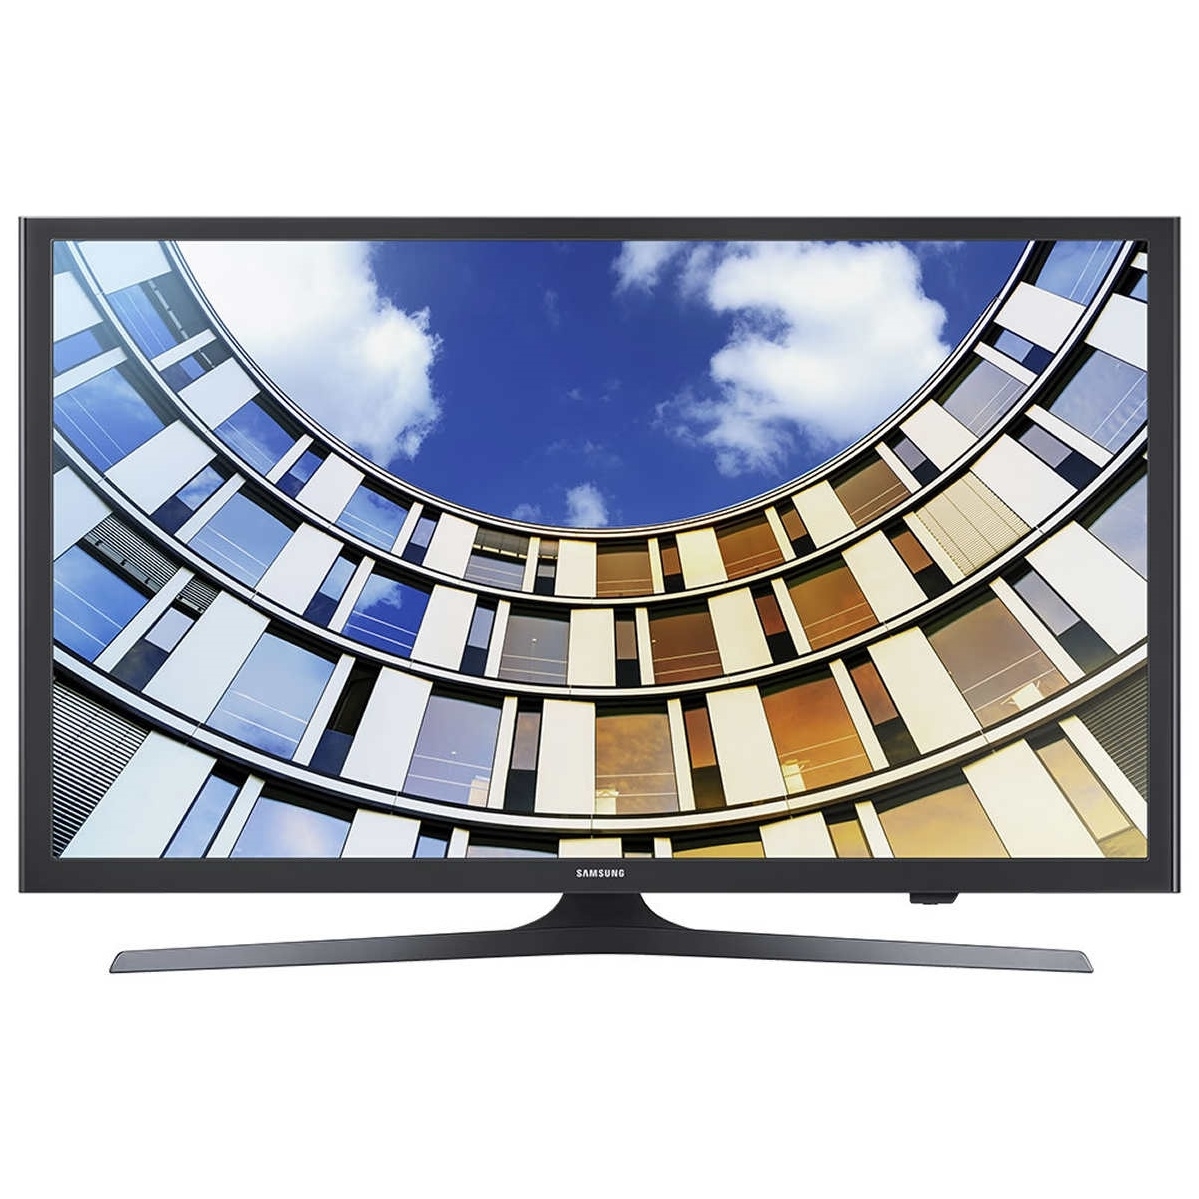 Samsung Refurbished Samsung UN49M530DAFXZA 1080p 49" LED LCD Smart TV, Black (Certified Refurbished)